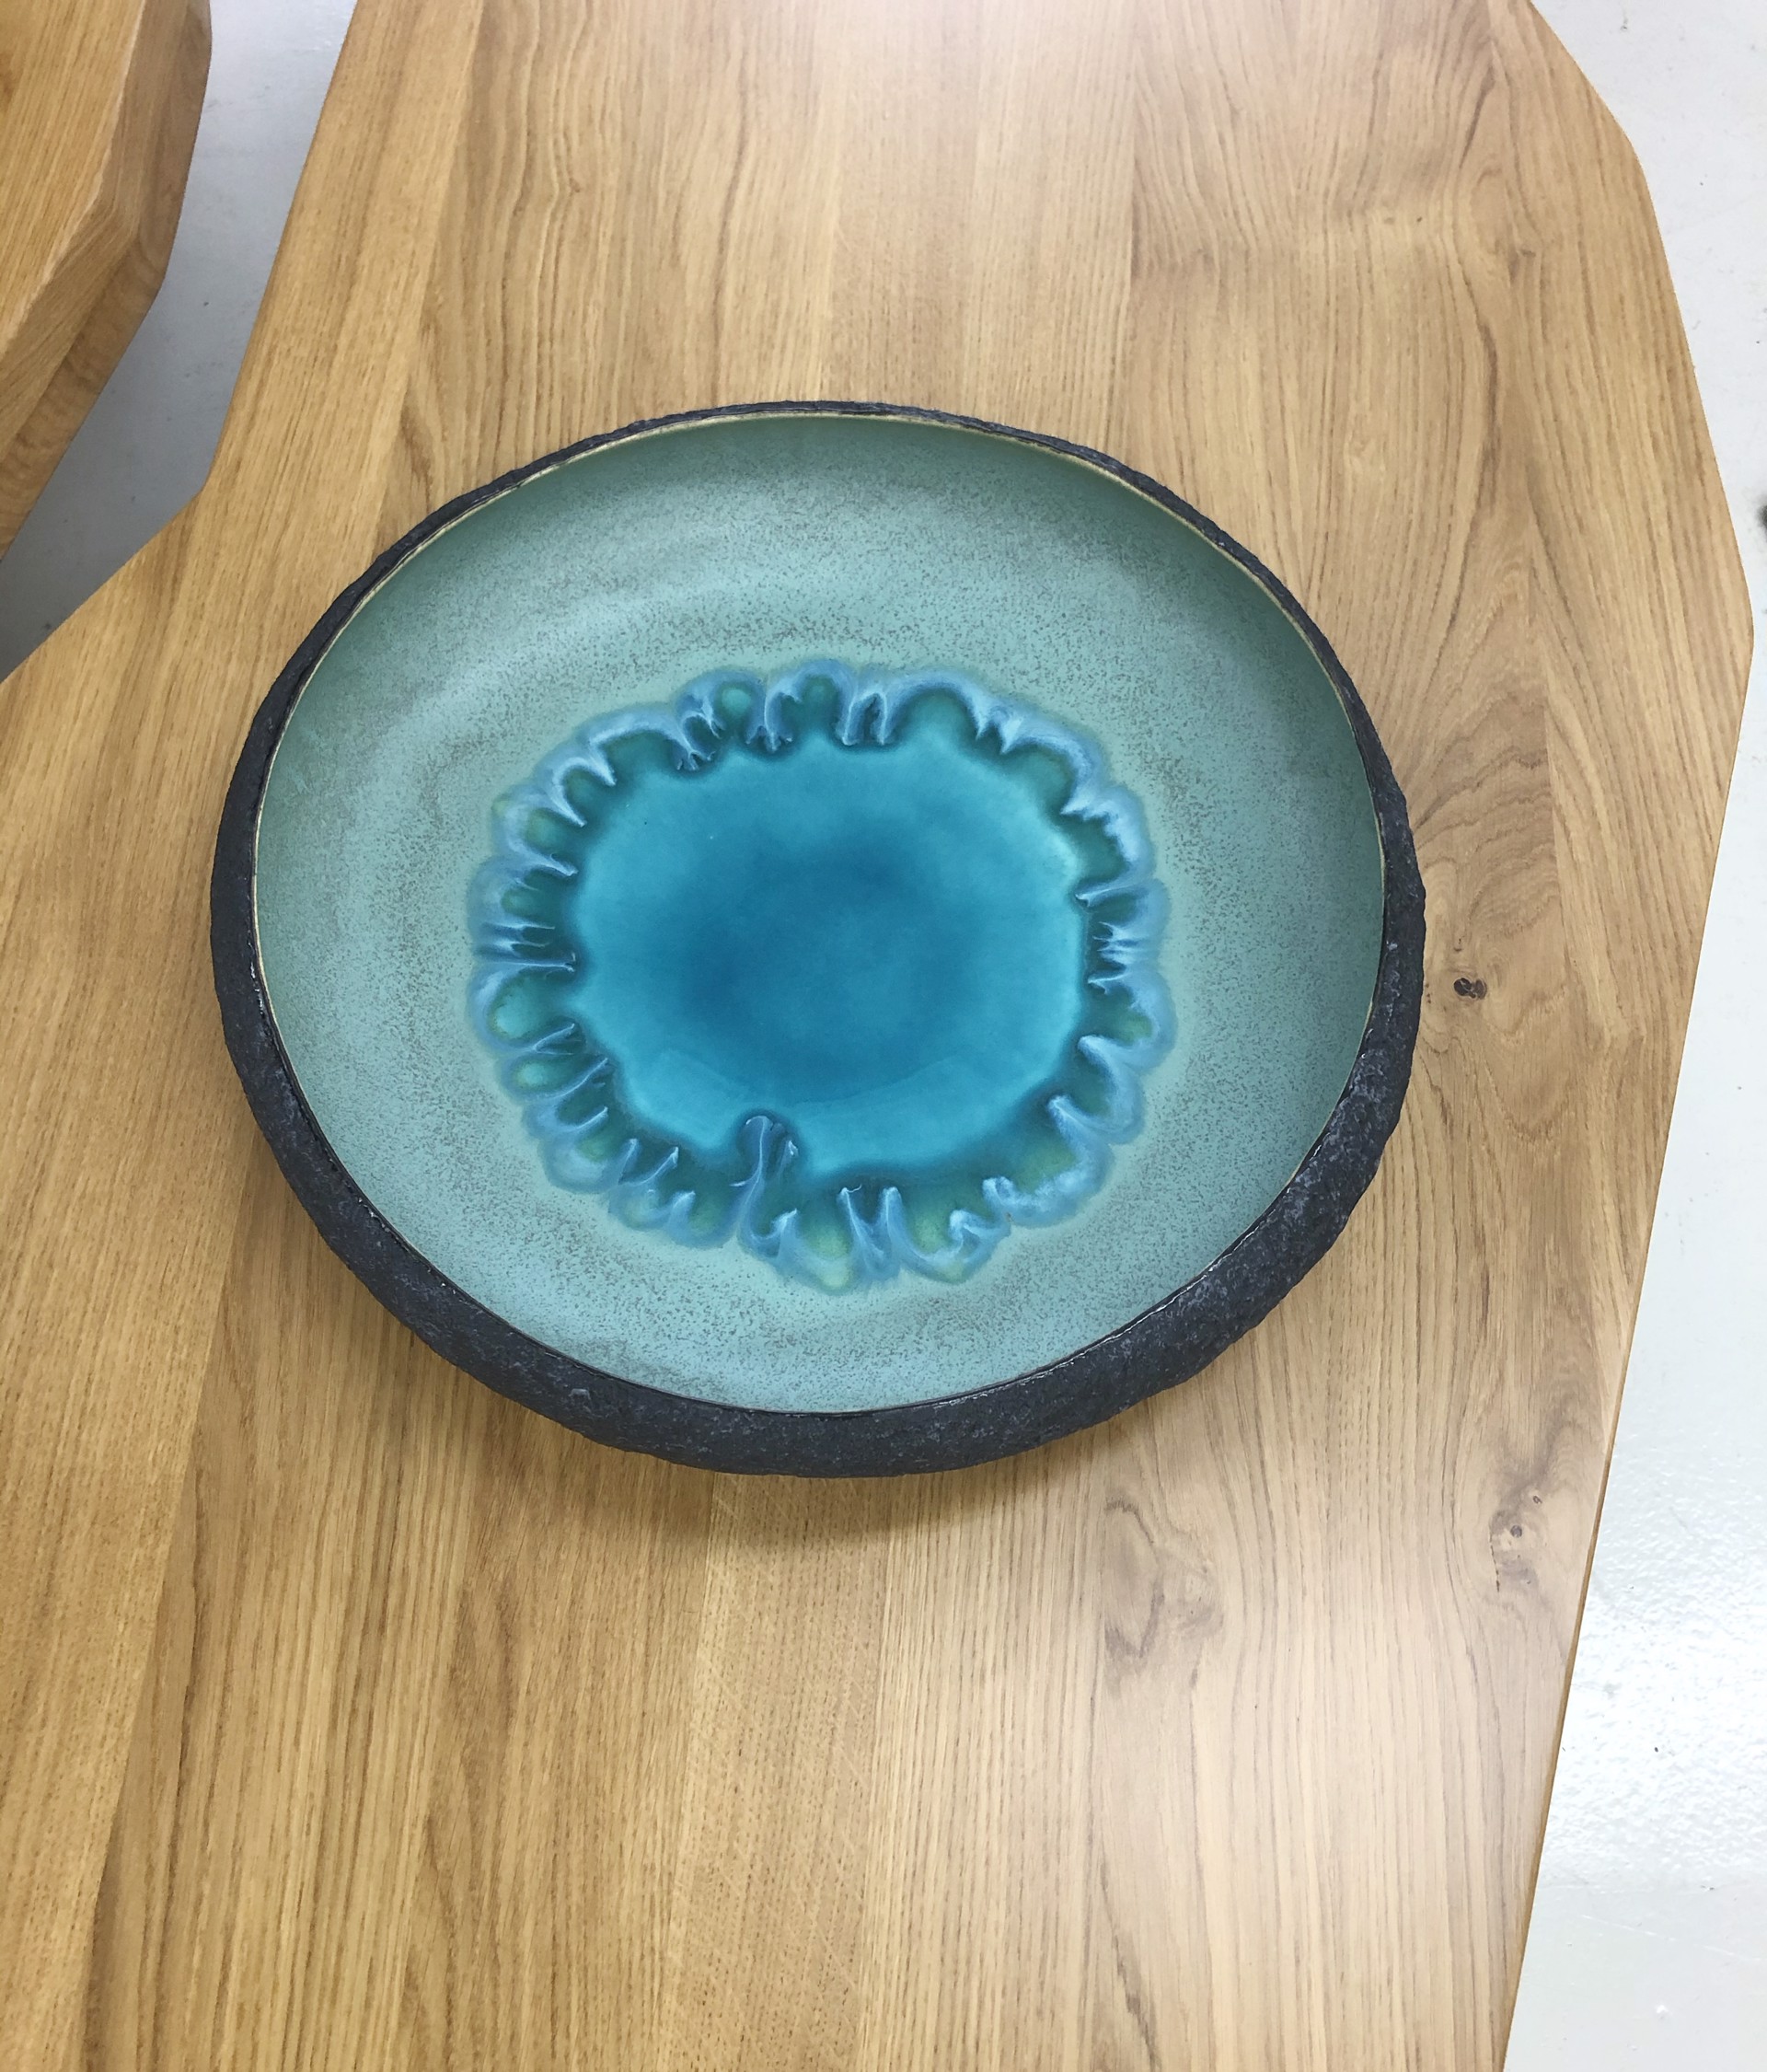 Centerpiece with turquoise glaze by Cristina Salusti